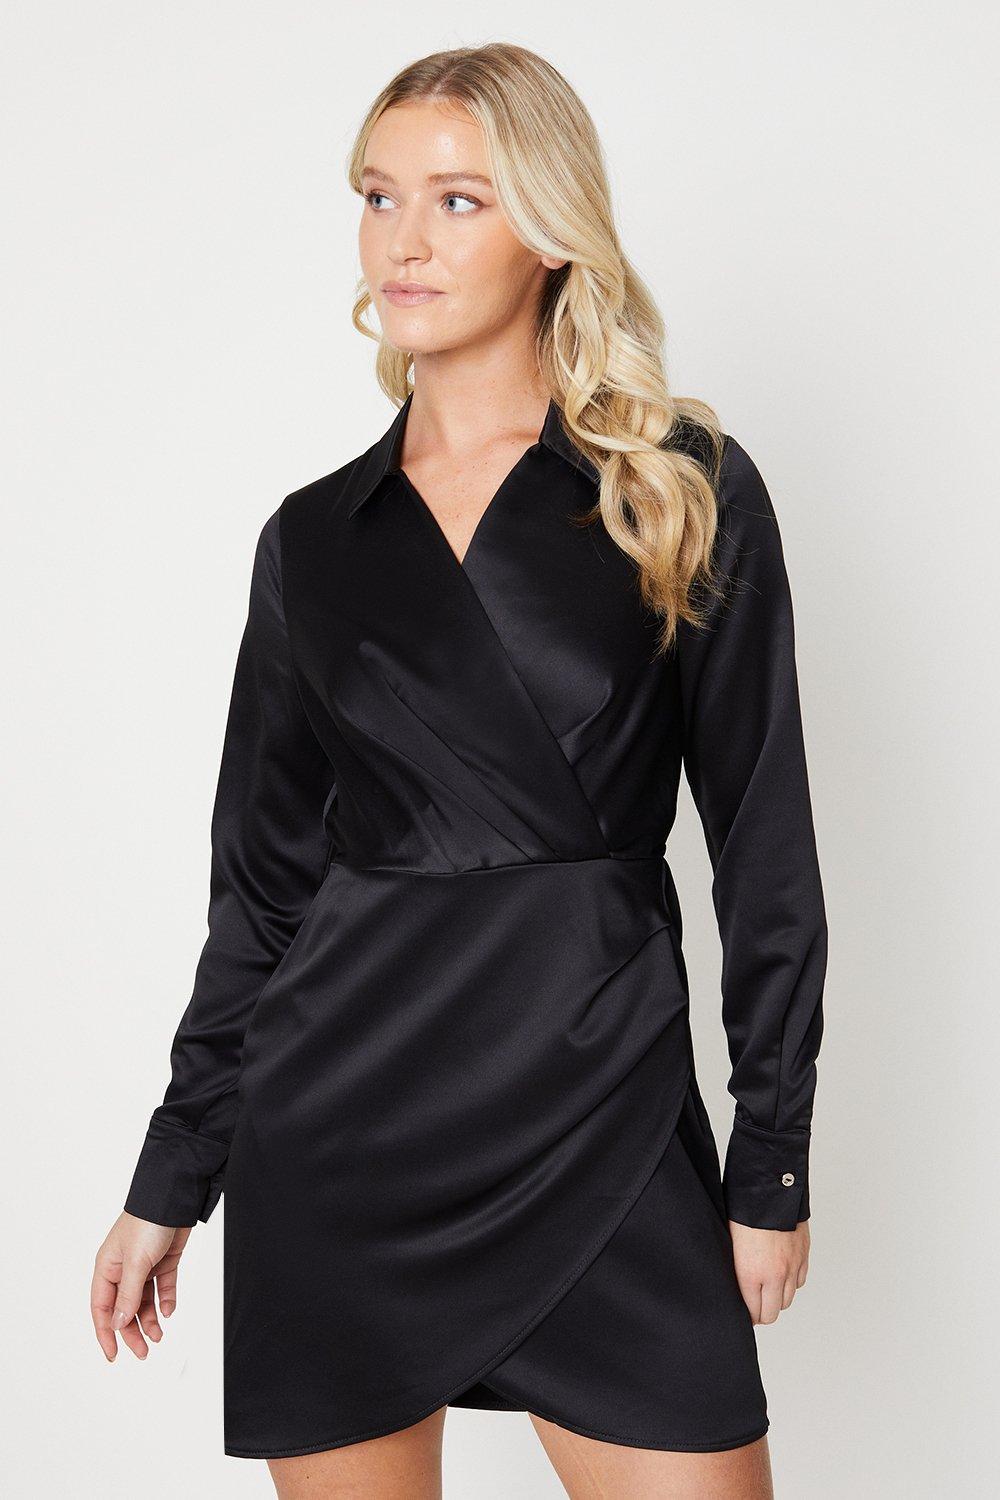 Women’s Black Wrap Over Ruched Mini Dress - 12